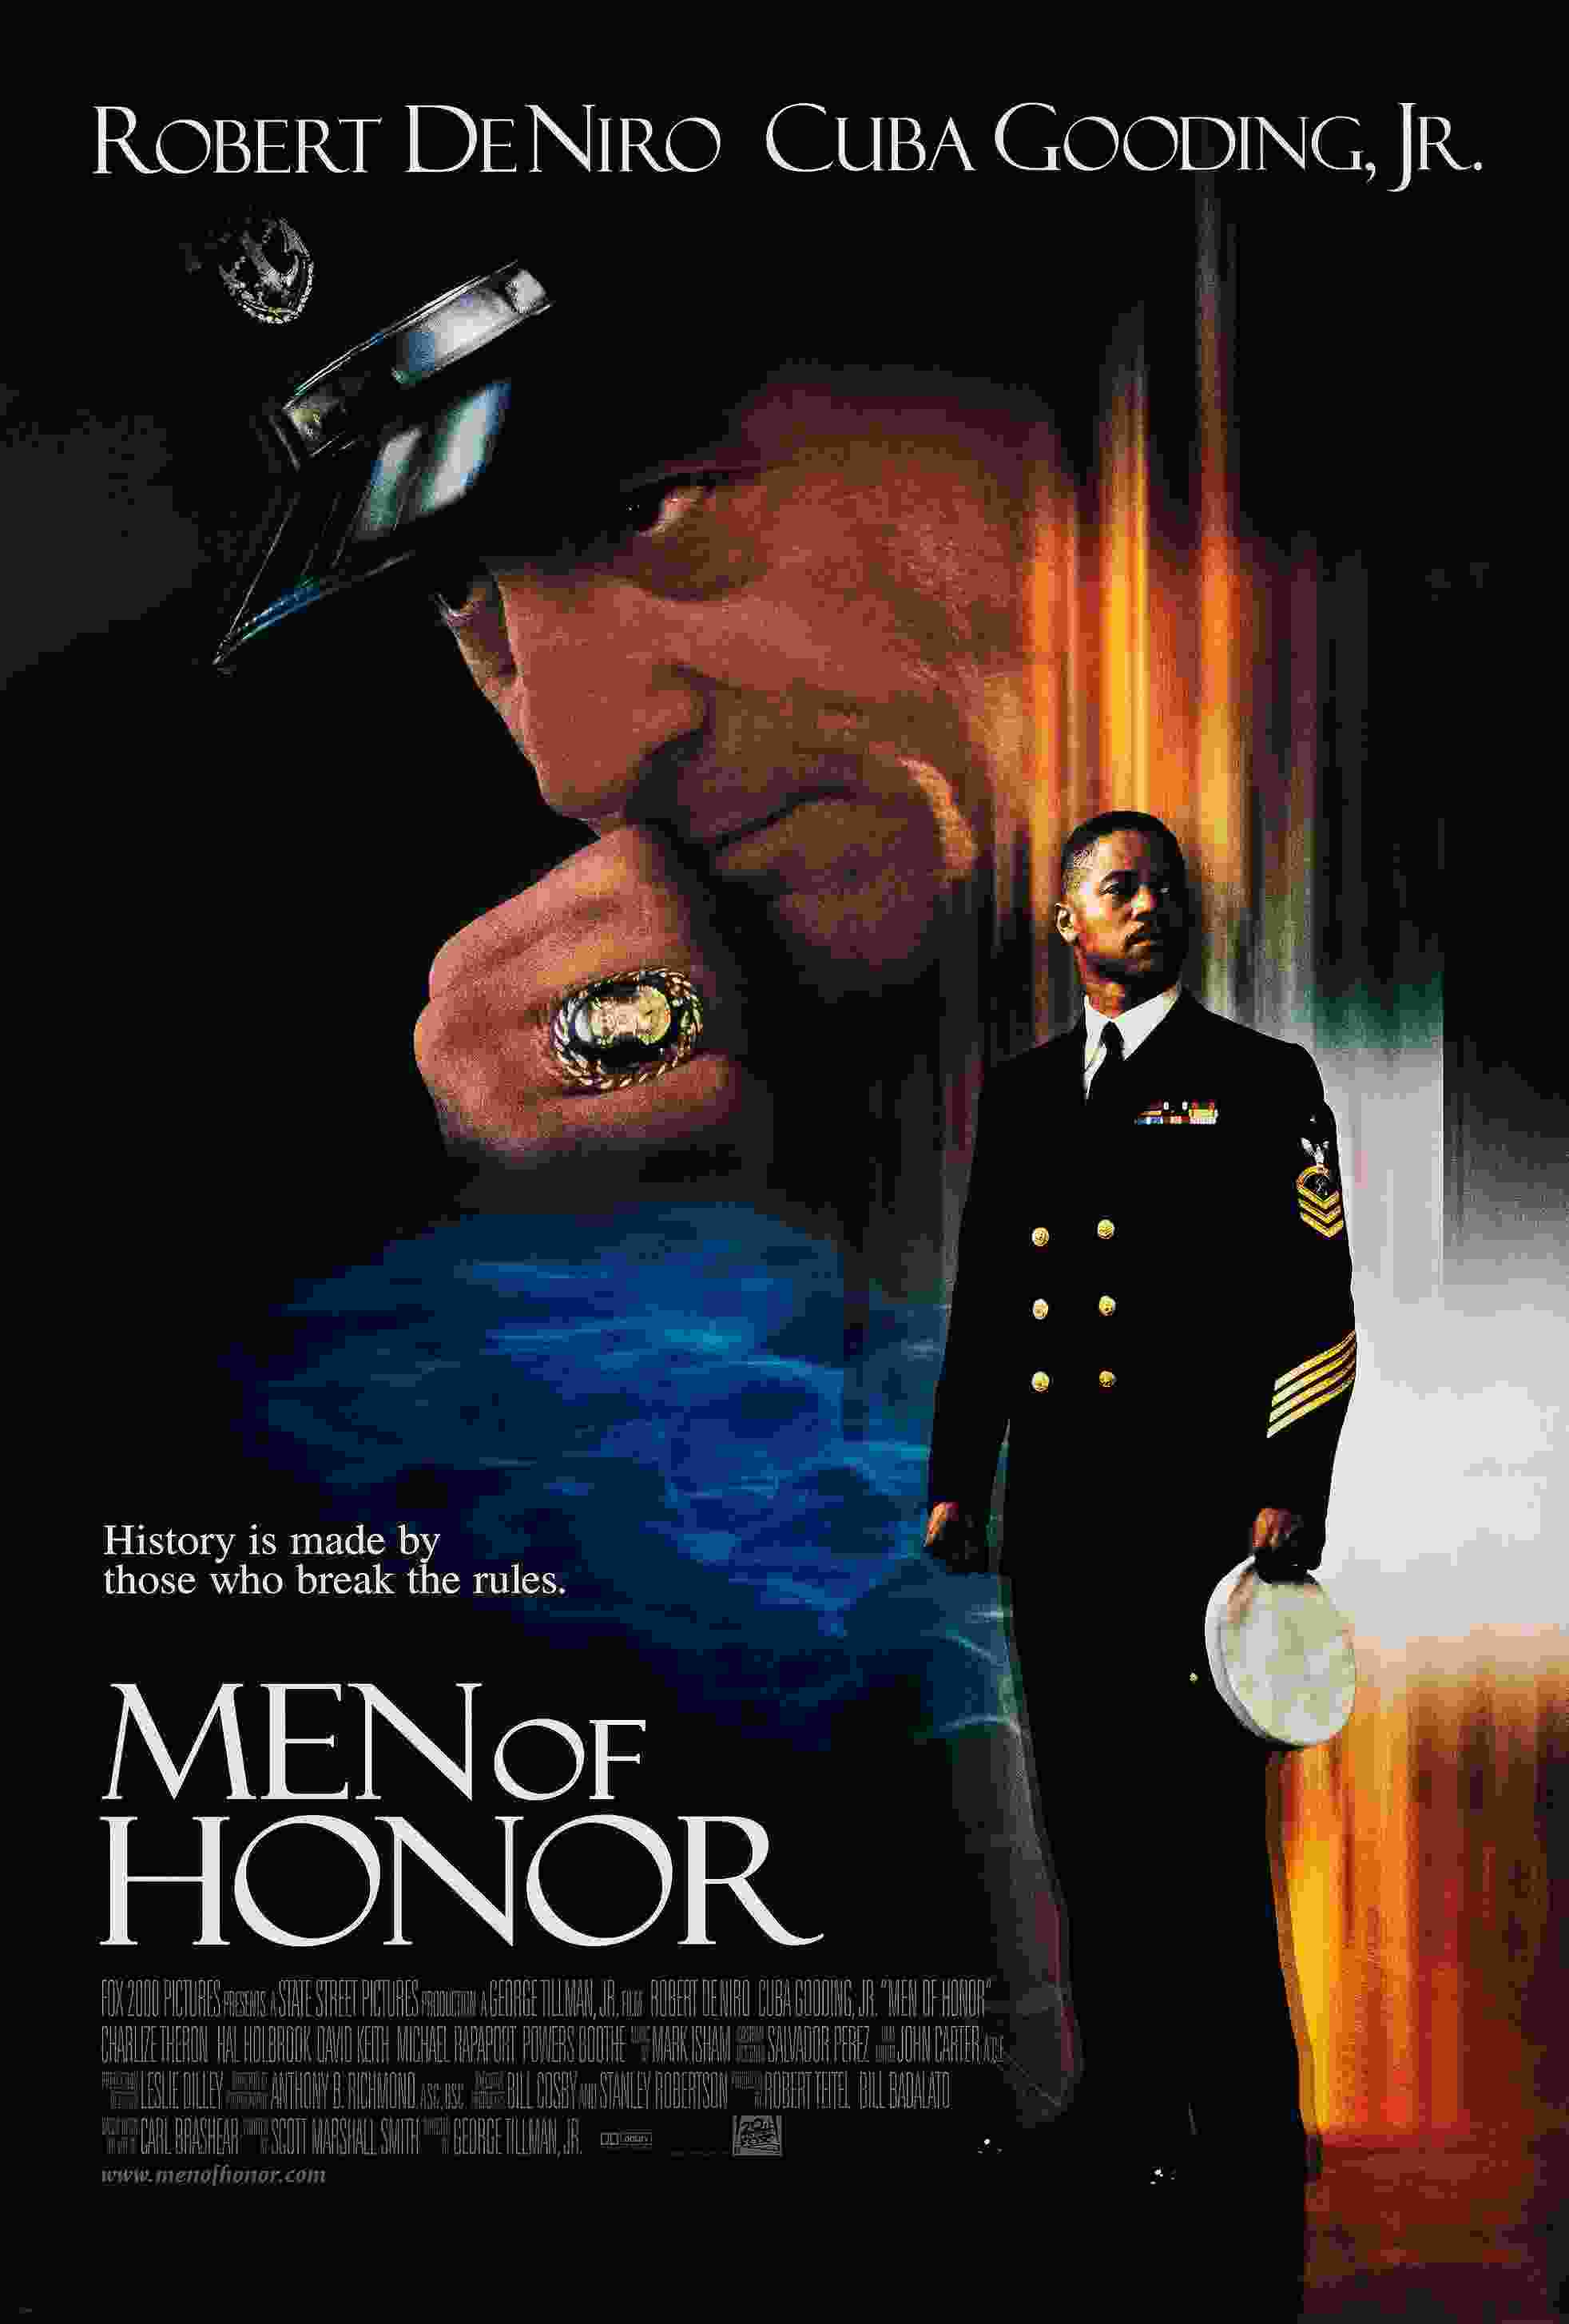 Men of Honor (2000) vj mark Cuba Gooding Jr.